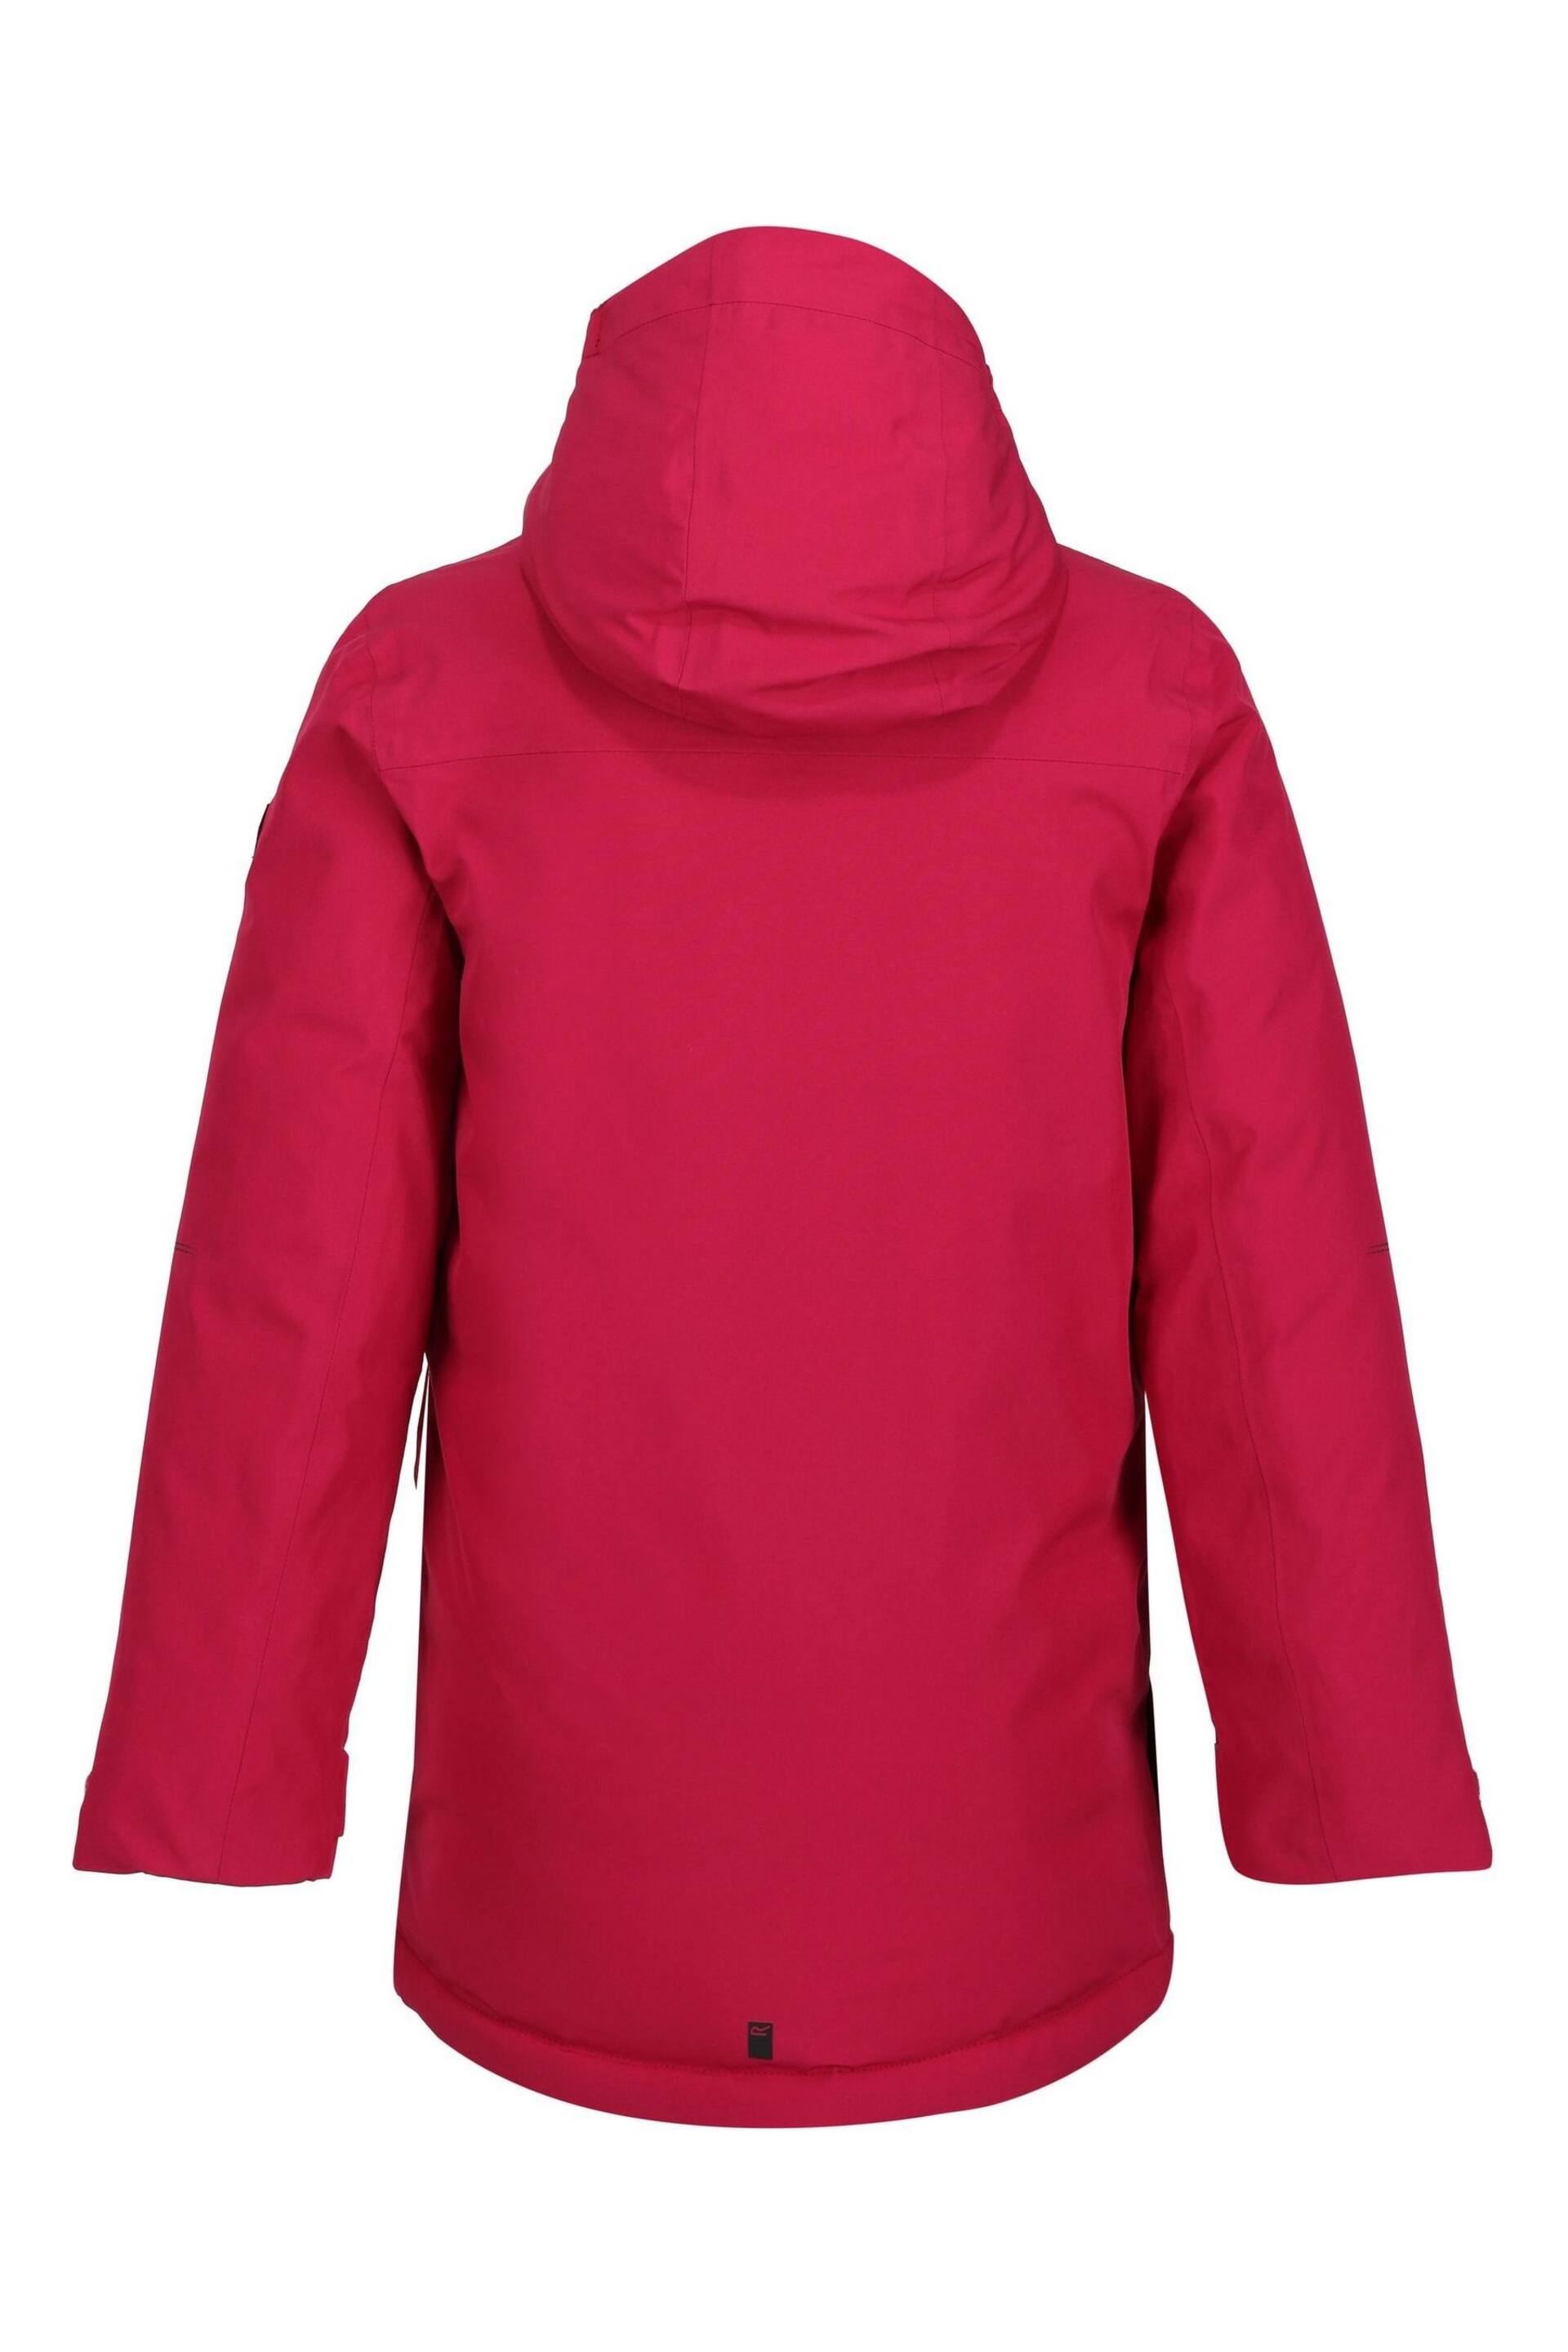 Regatta Pink Junior Yewbank Waterproof Jacket - Image 5 of 7